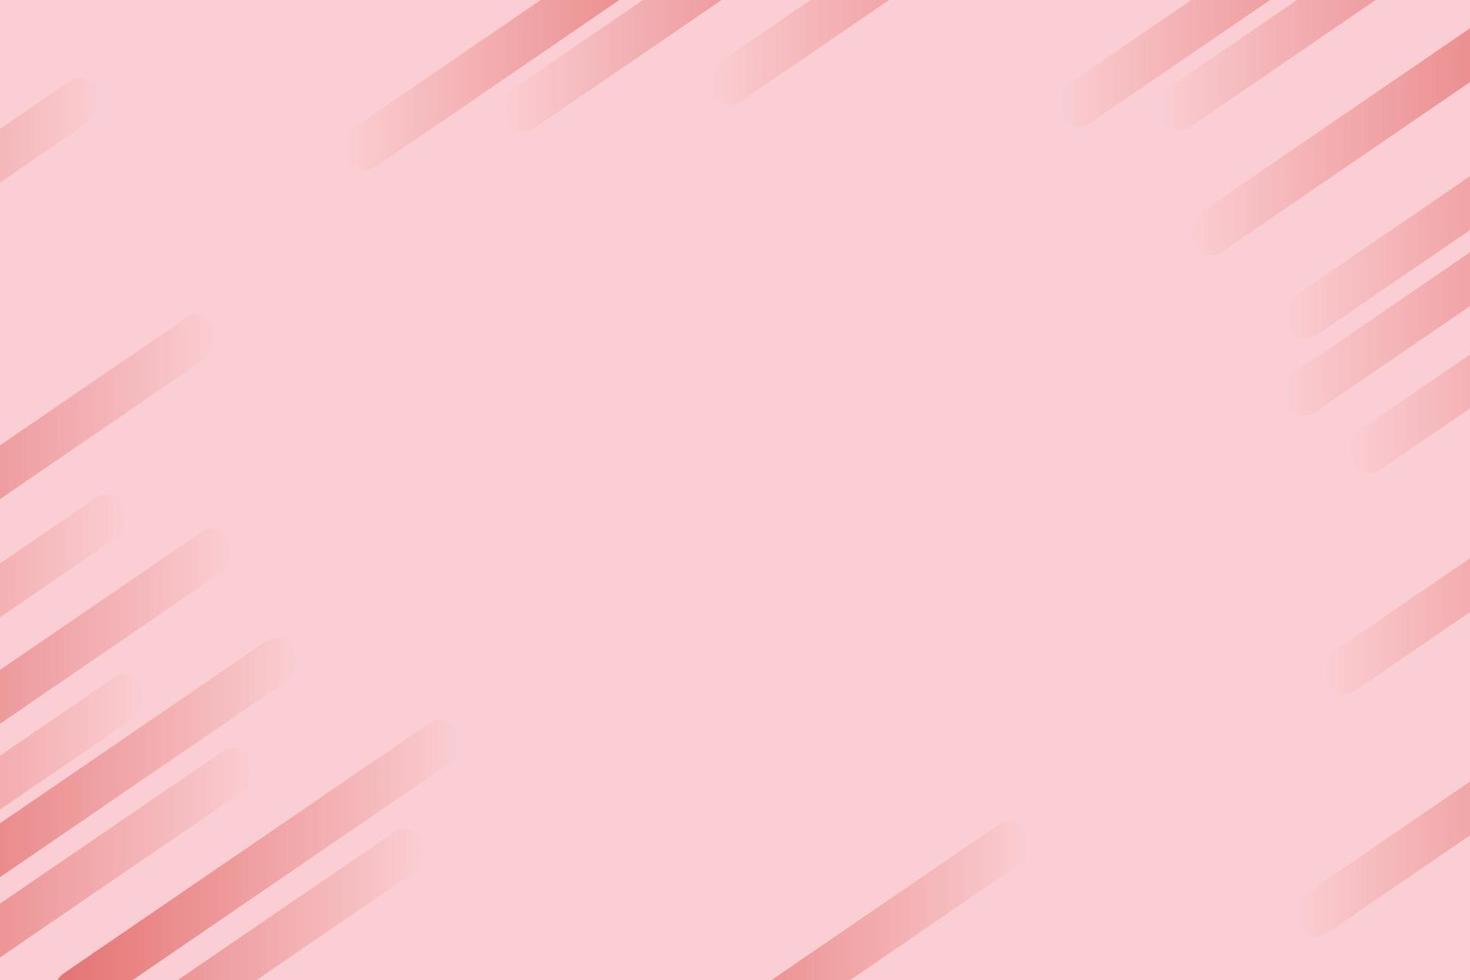 vector gratis de fondo abstracto rosa